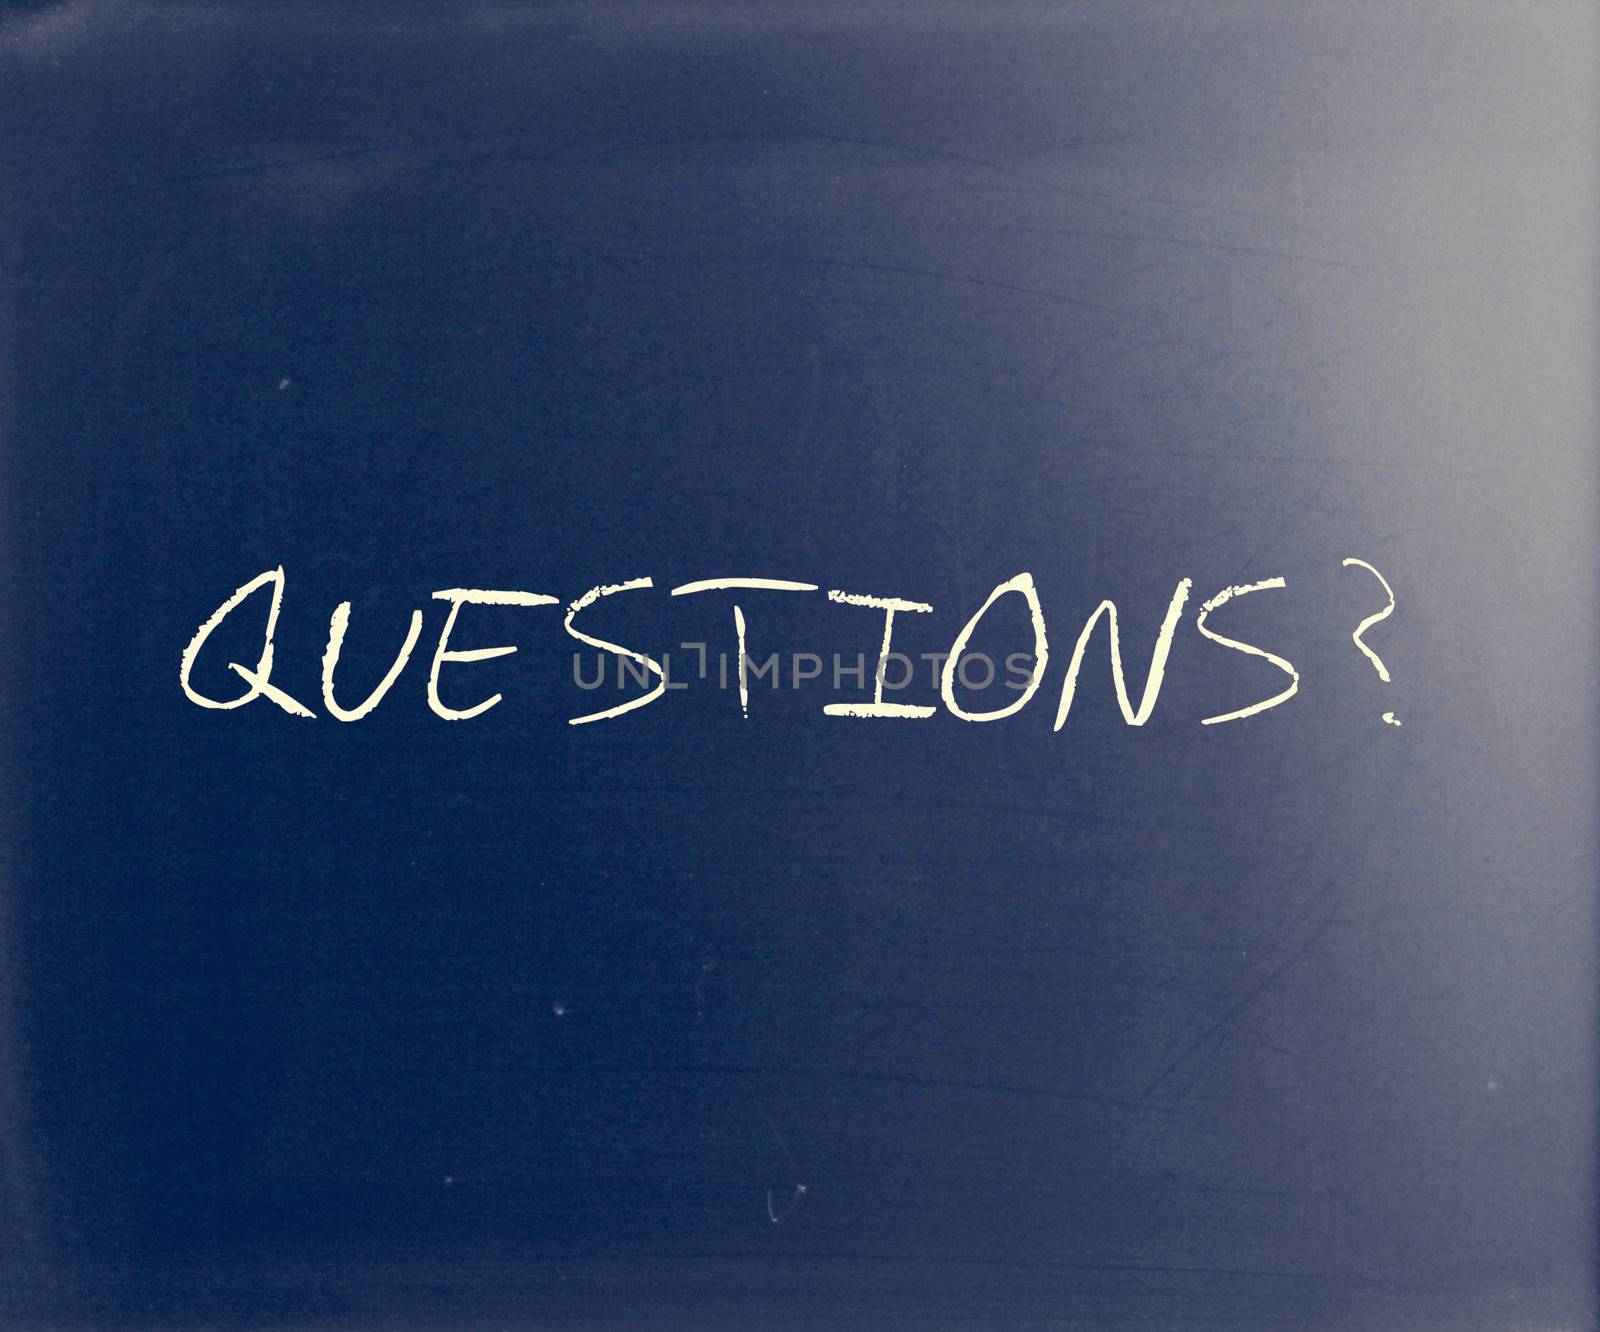 "Questions?" handwritten with white chalk on a blackboard by nenov